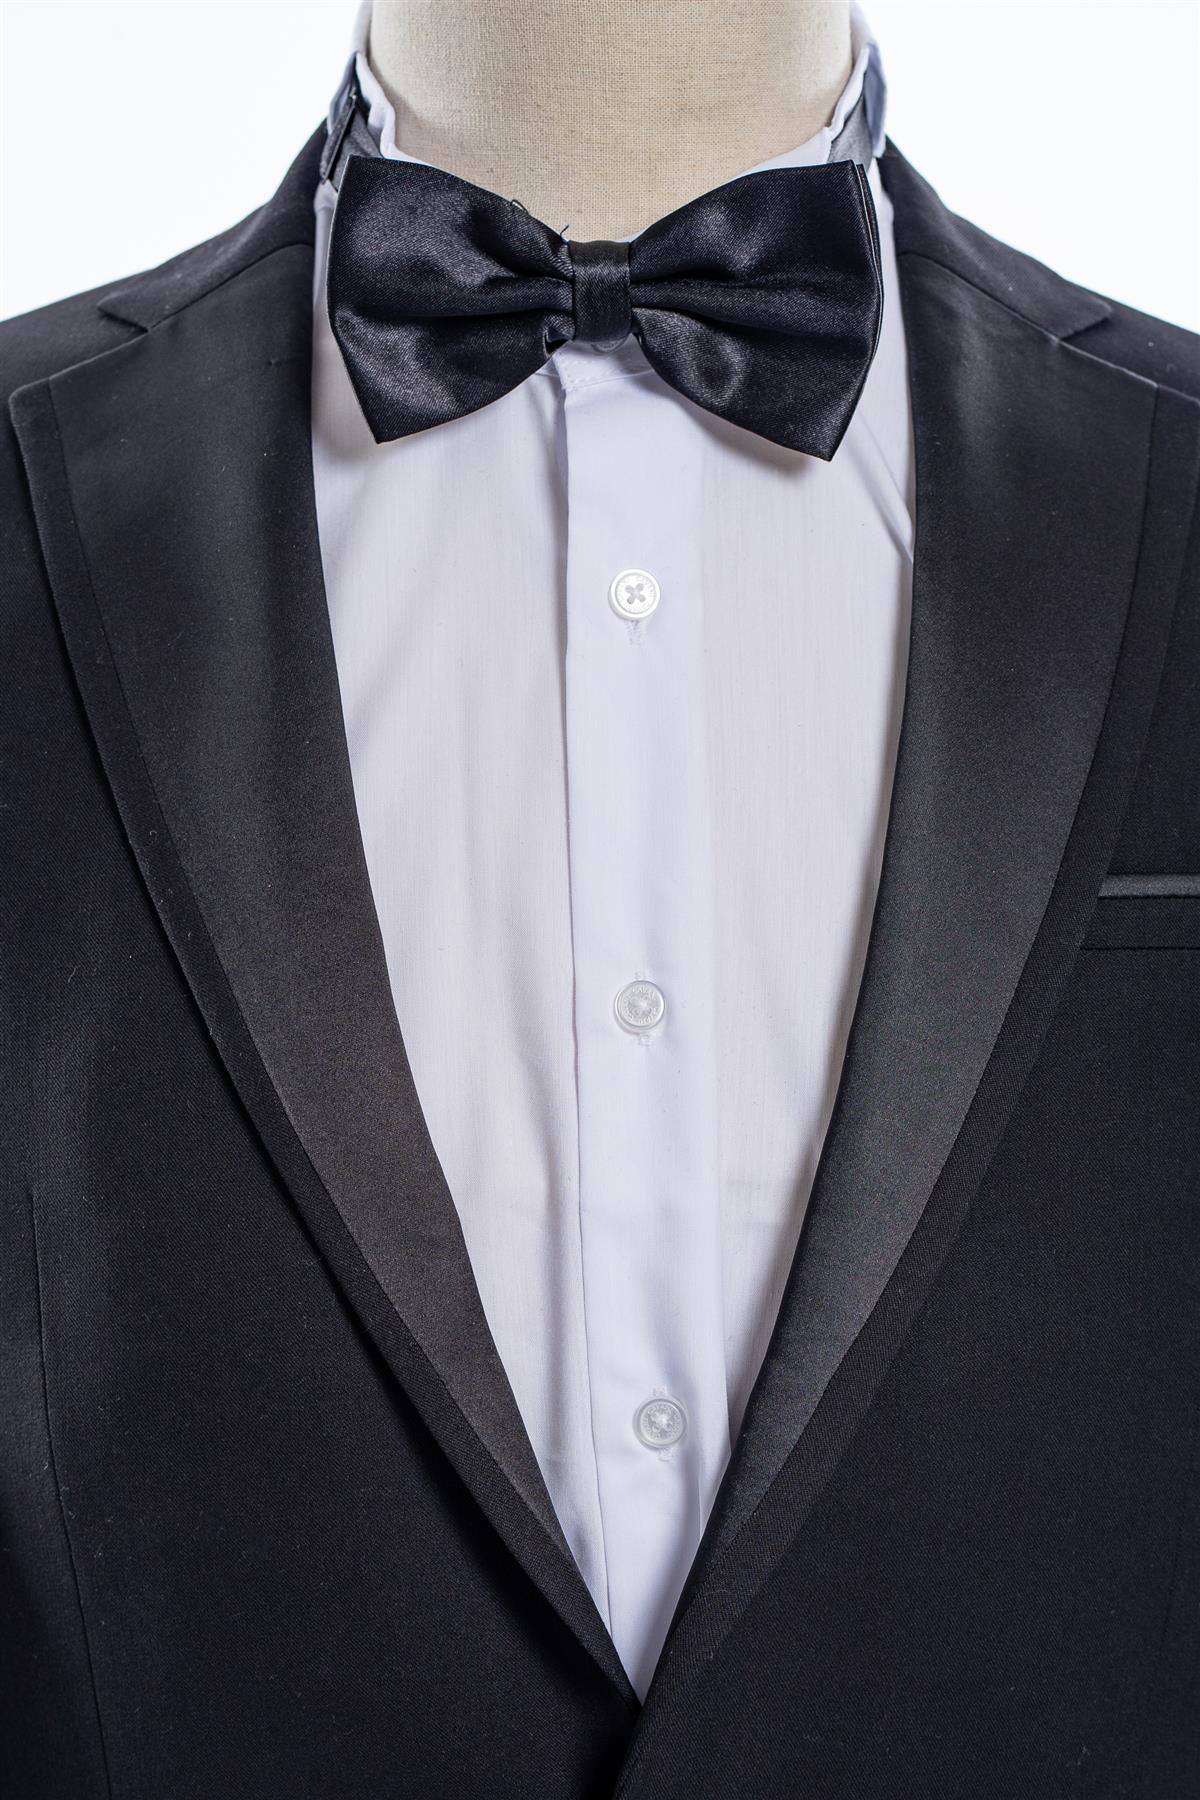 Satin black bow tie set front